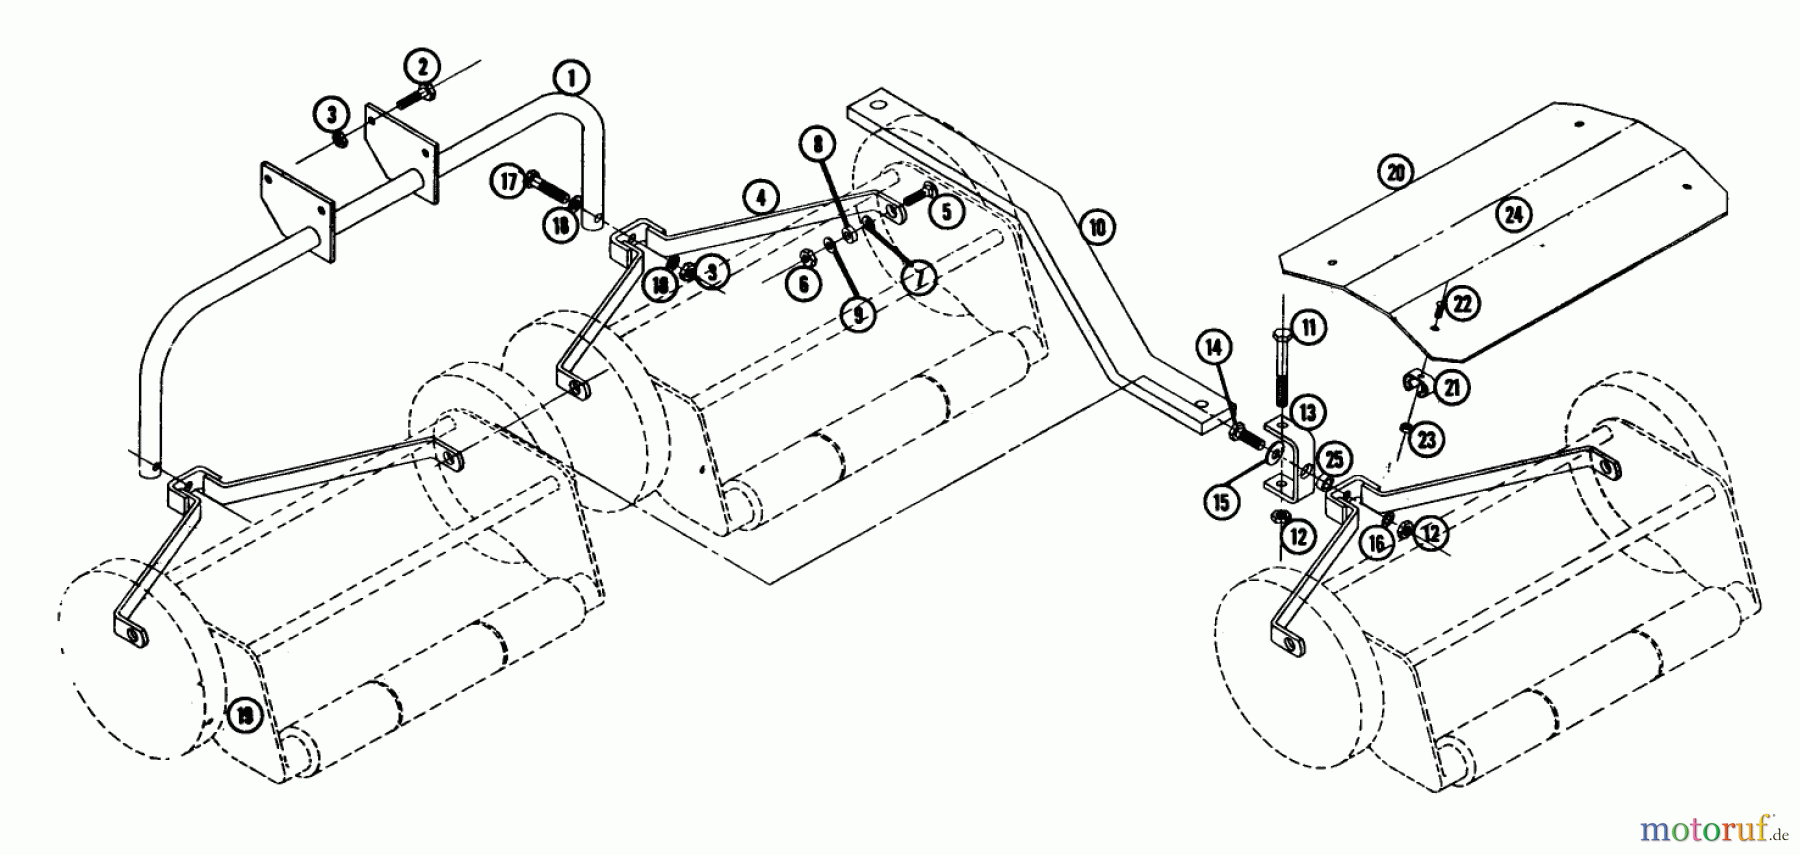  Toro Neu Mowers, Deck Assembly Only SGM-603 - Toro 3 Gang Reel Mower, 1963 GANG MOWER PARTS LIST